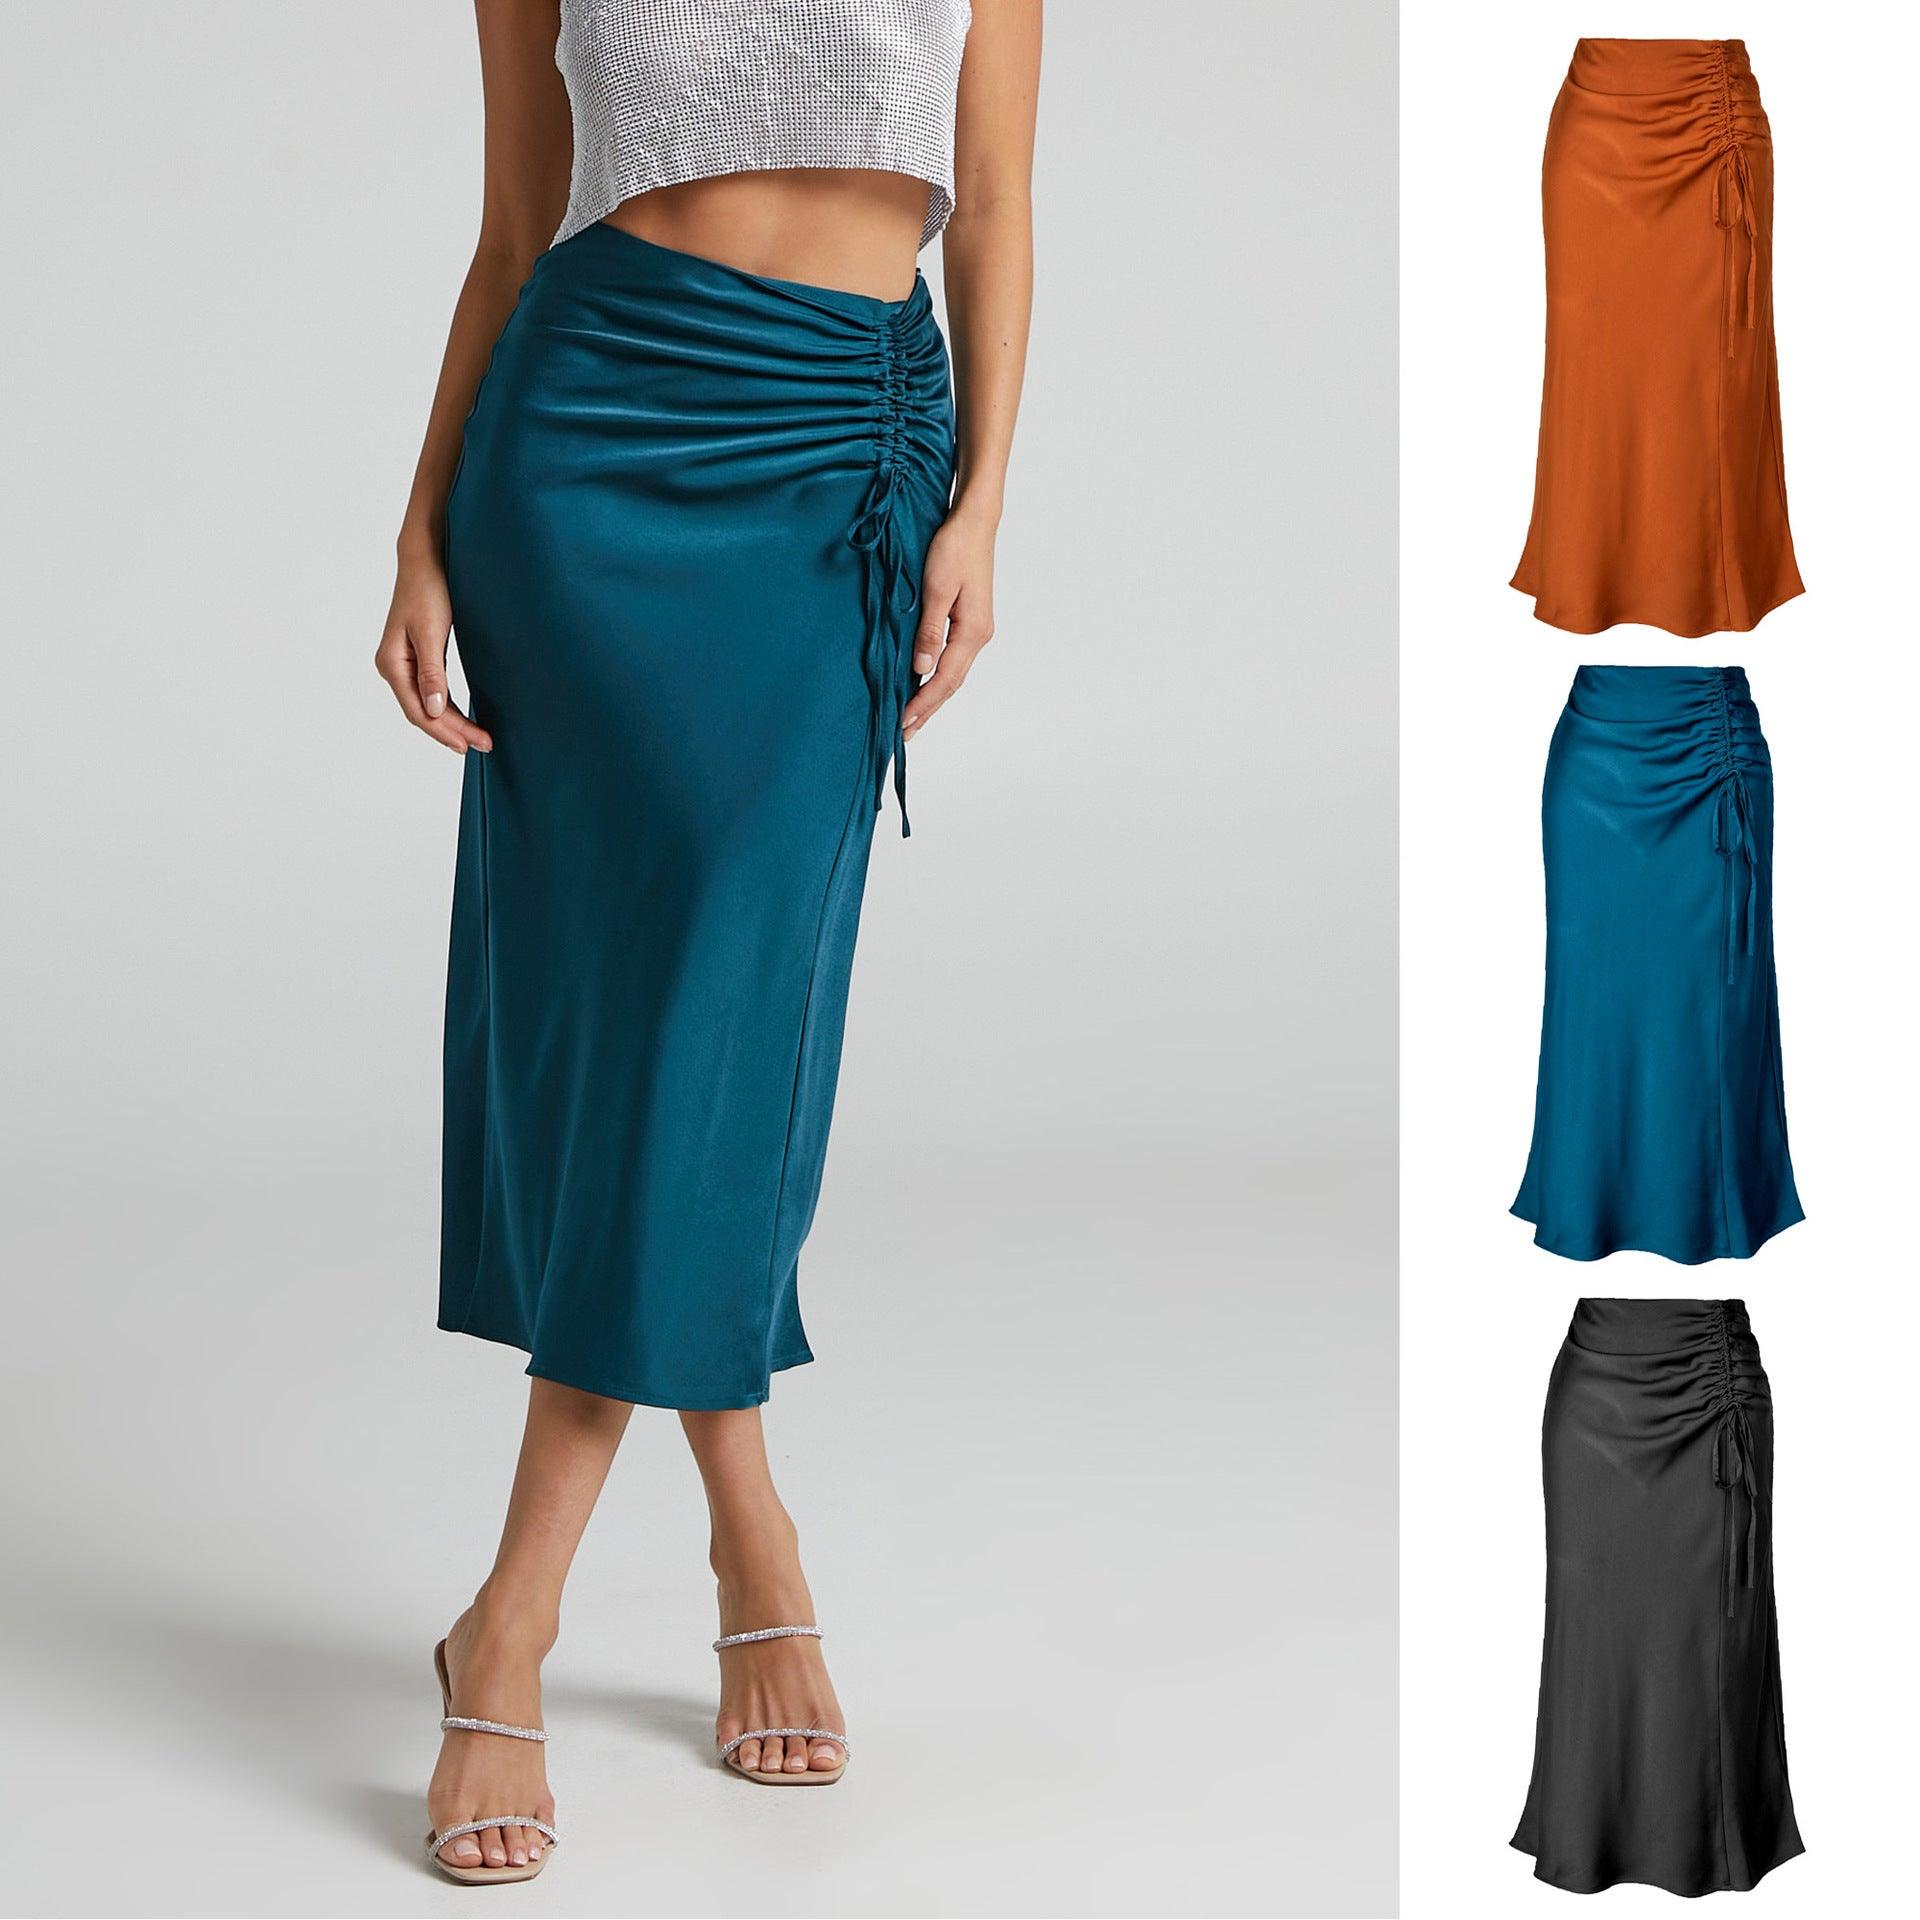 Sleek High-Waist Zippered Skirt – Slimming Design with Elegant Pleating - Glinyt